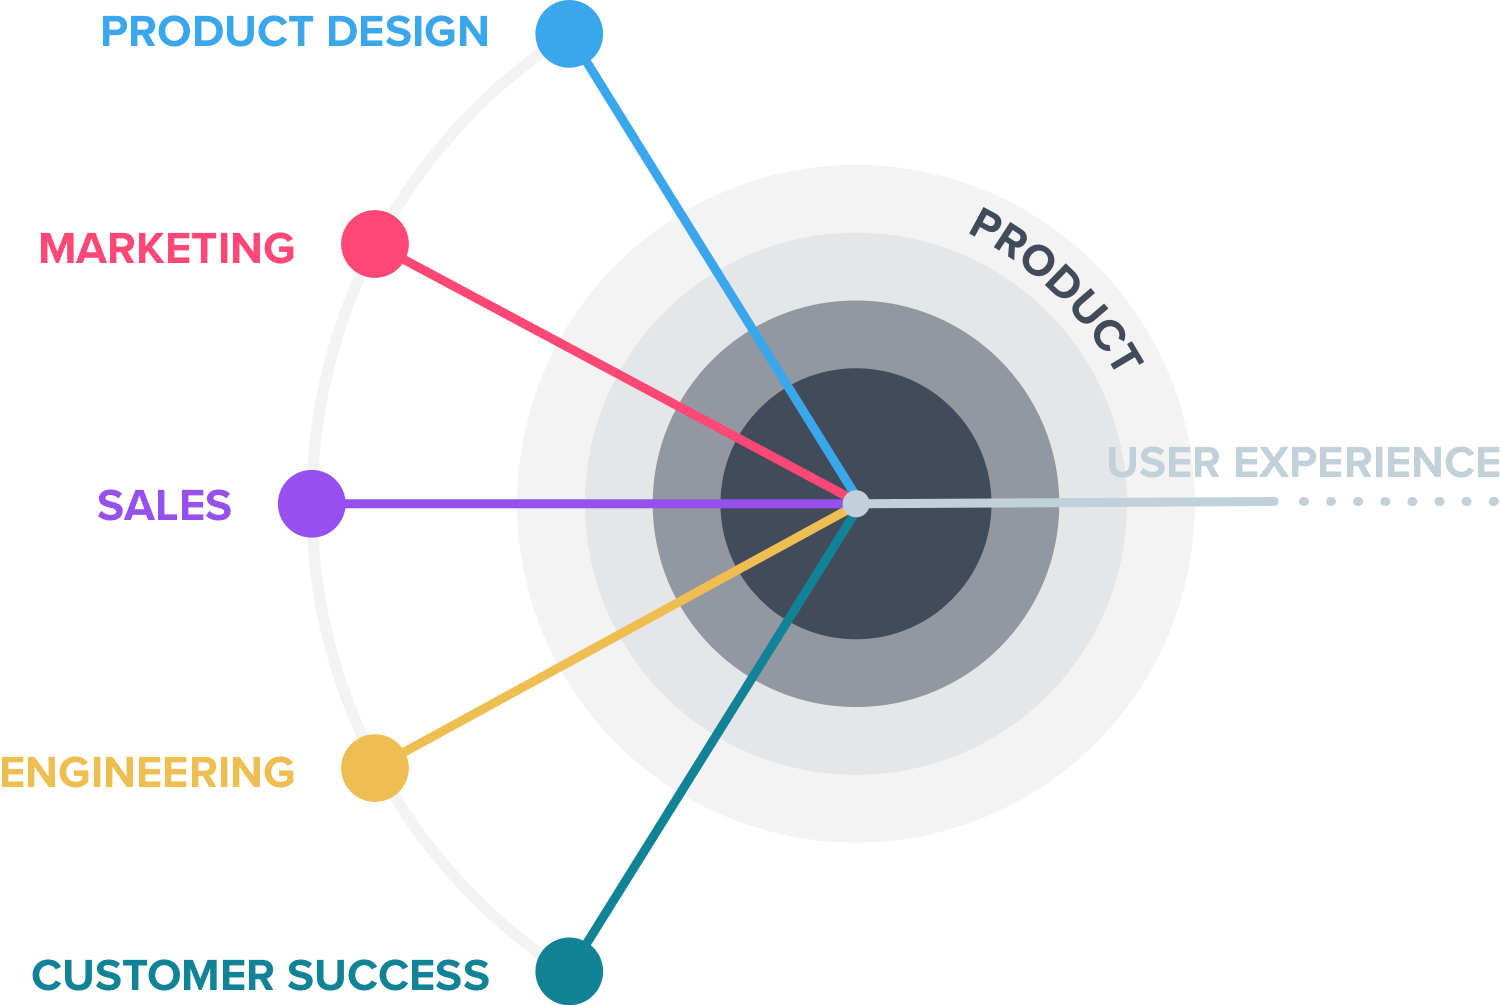 Product-Led Diagram